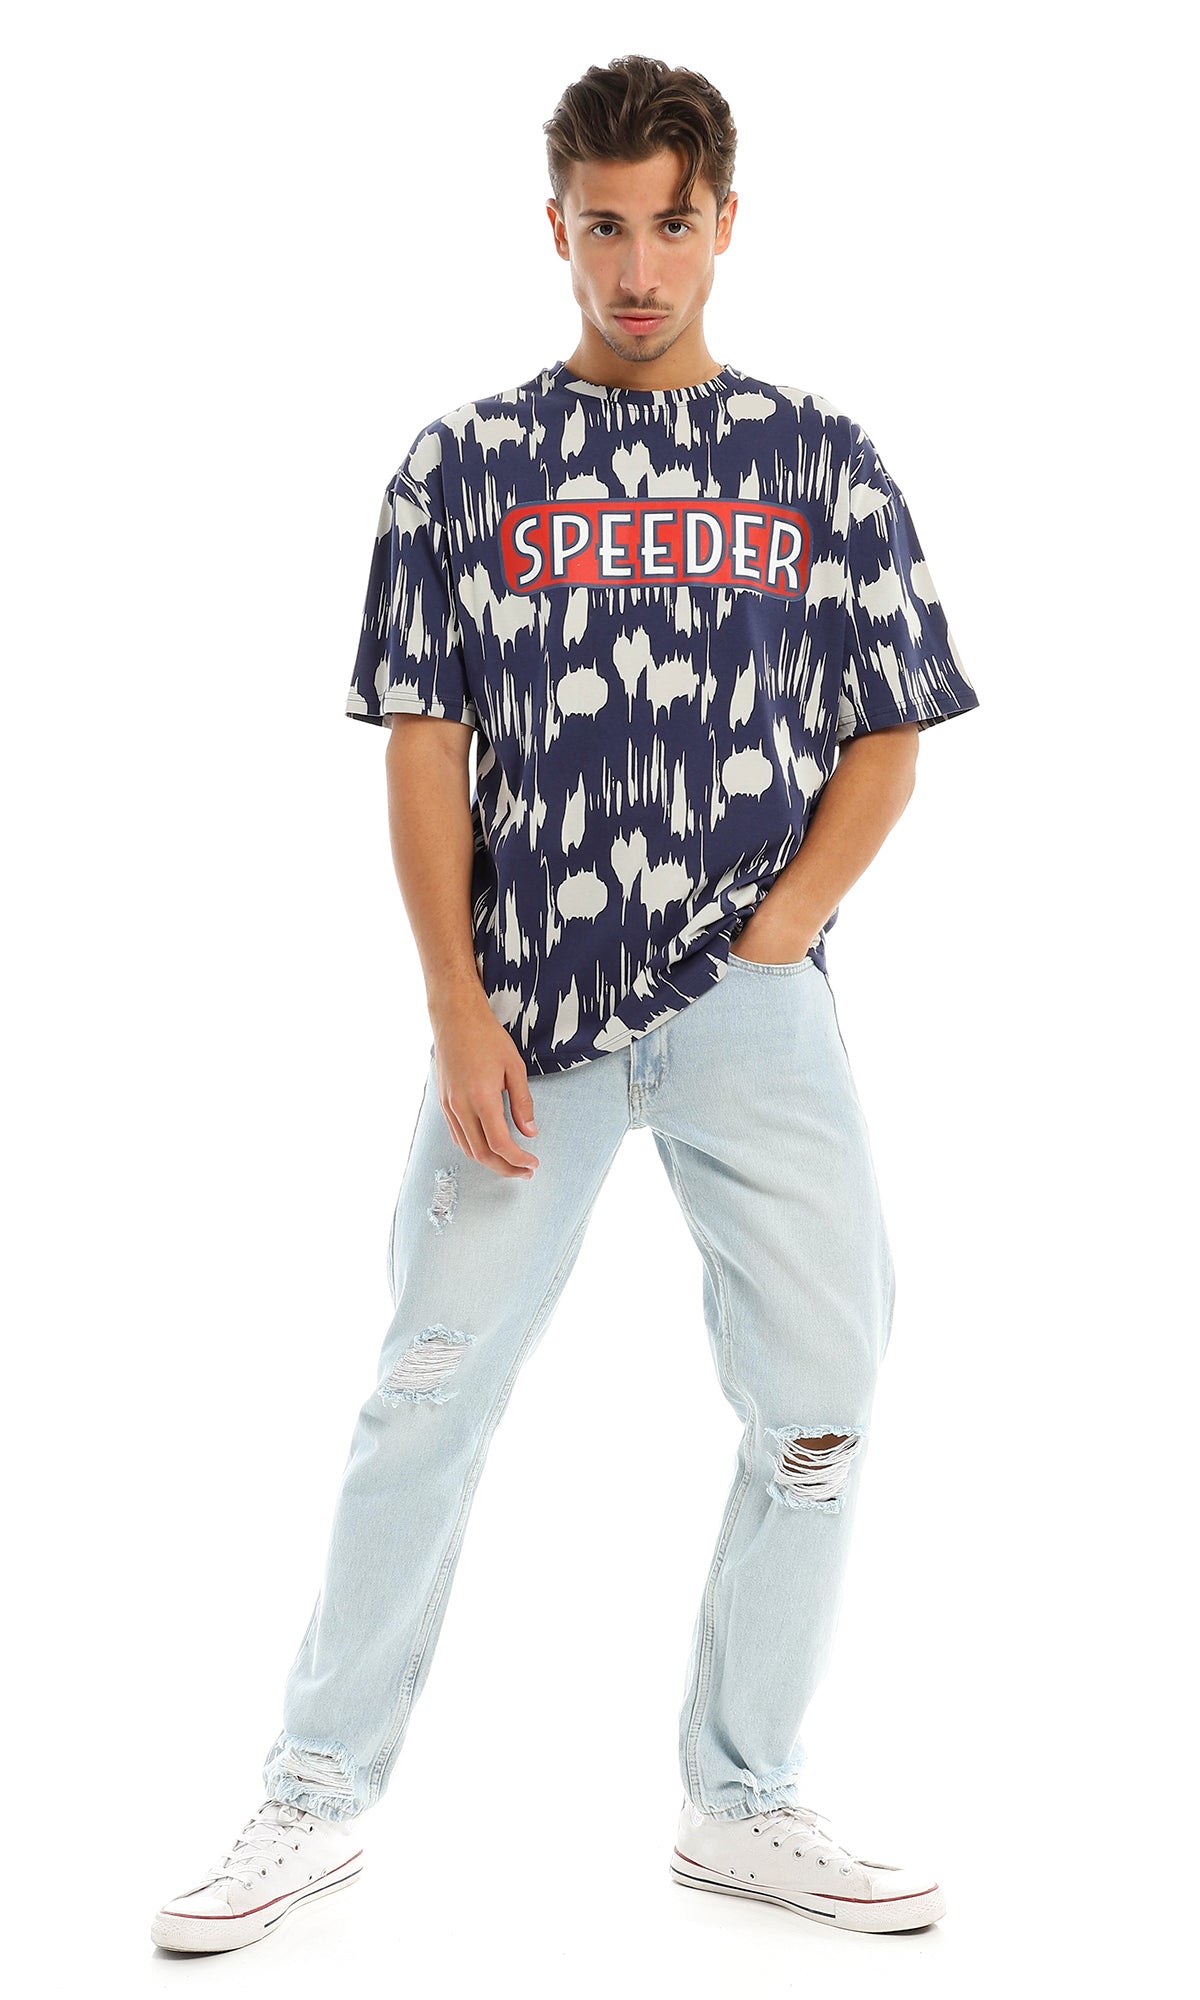 97356 "Speeder" Printed & Patterned Navy Blue T-Shirt